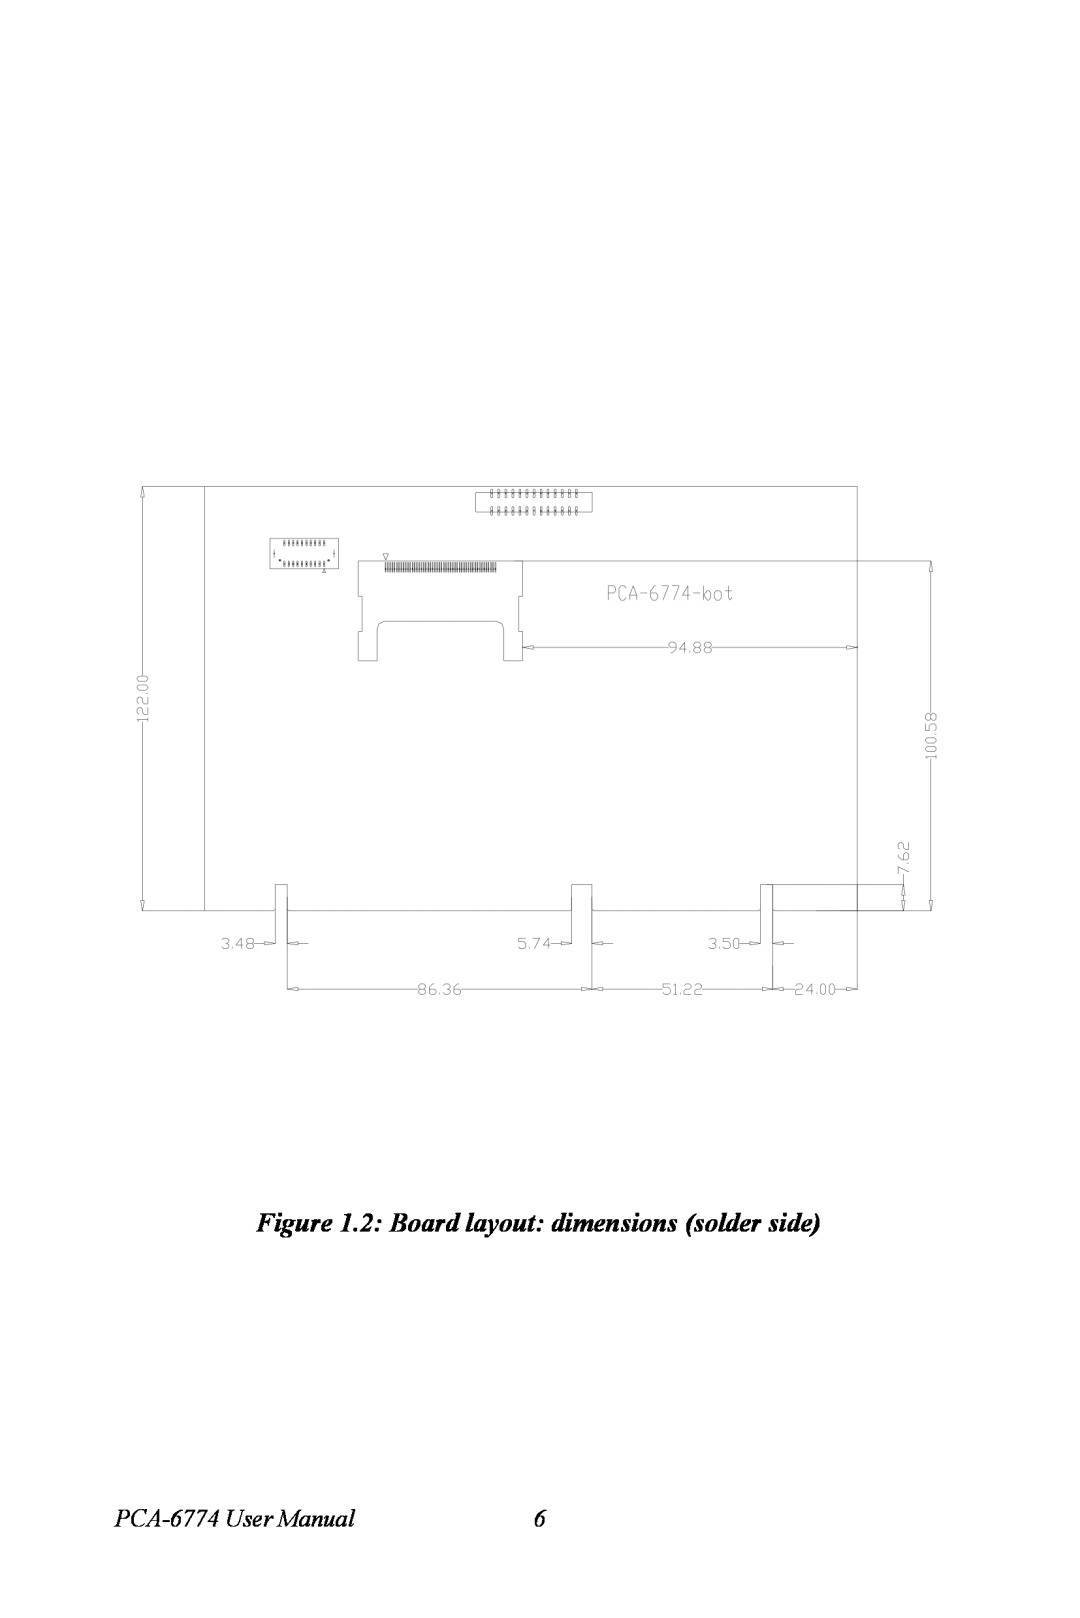 Advantech user manual 2 Board layout dimensions solder side, PCA-6774 User Manual 